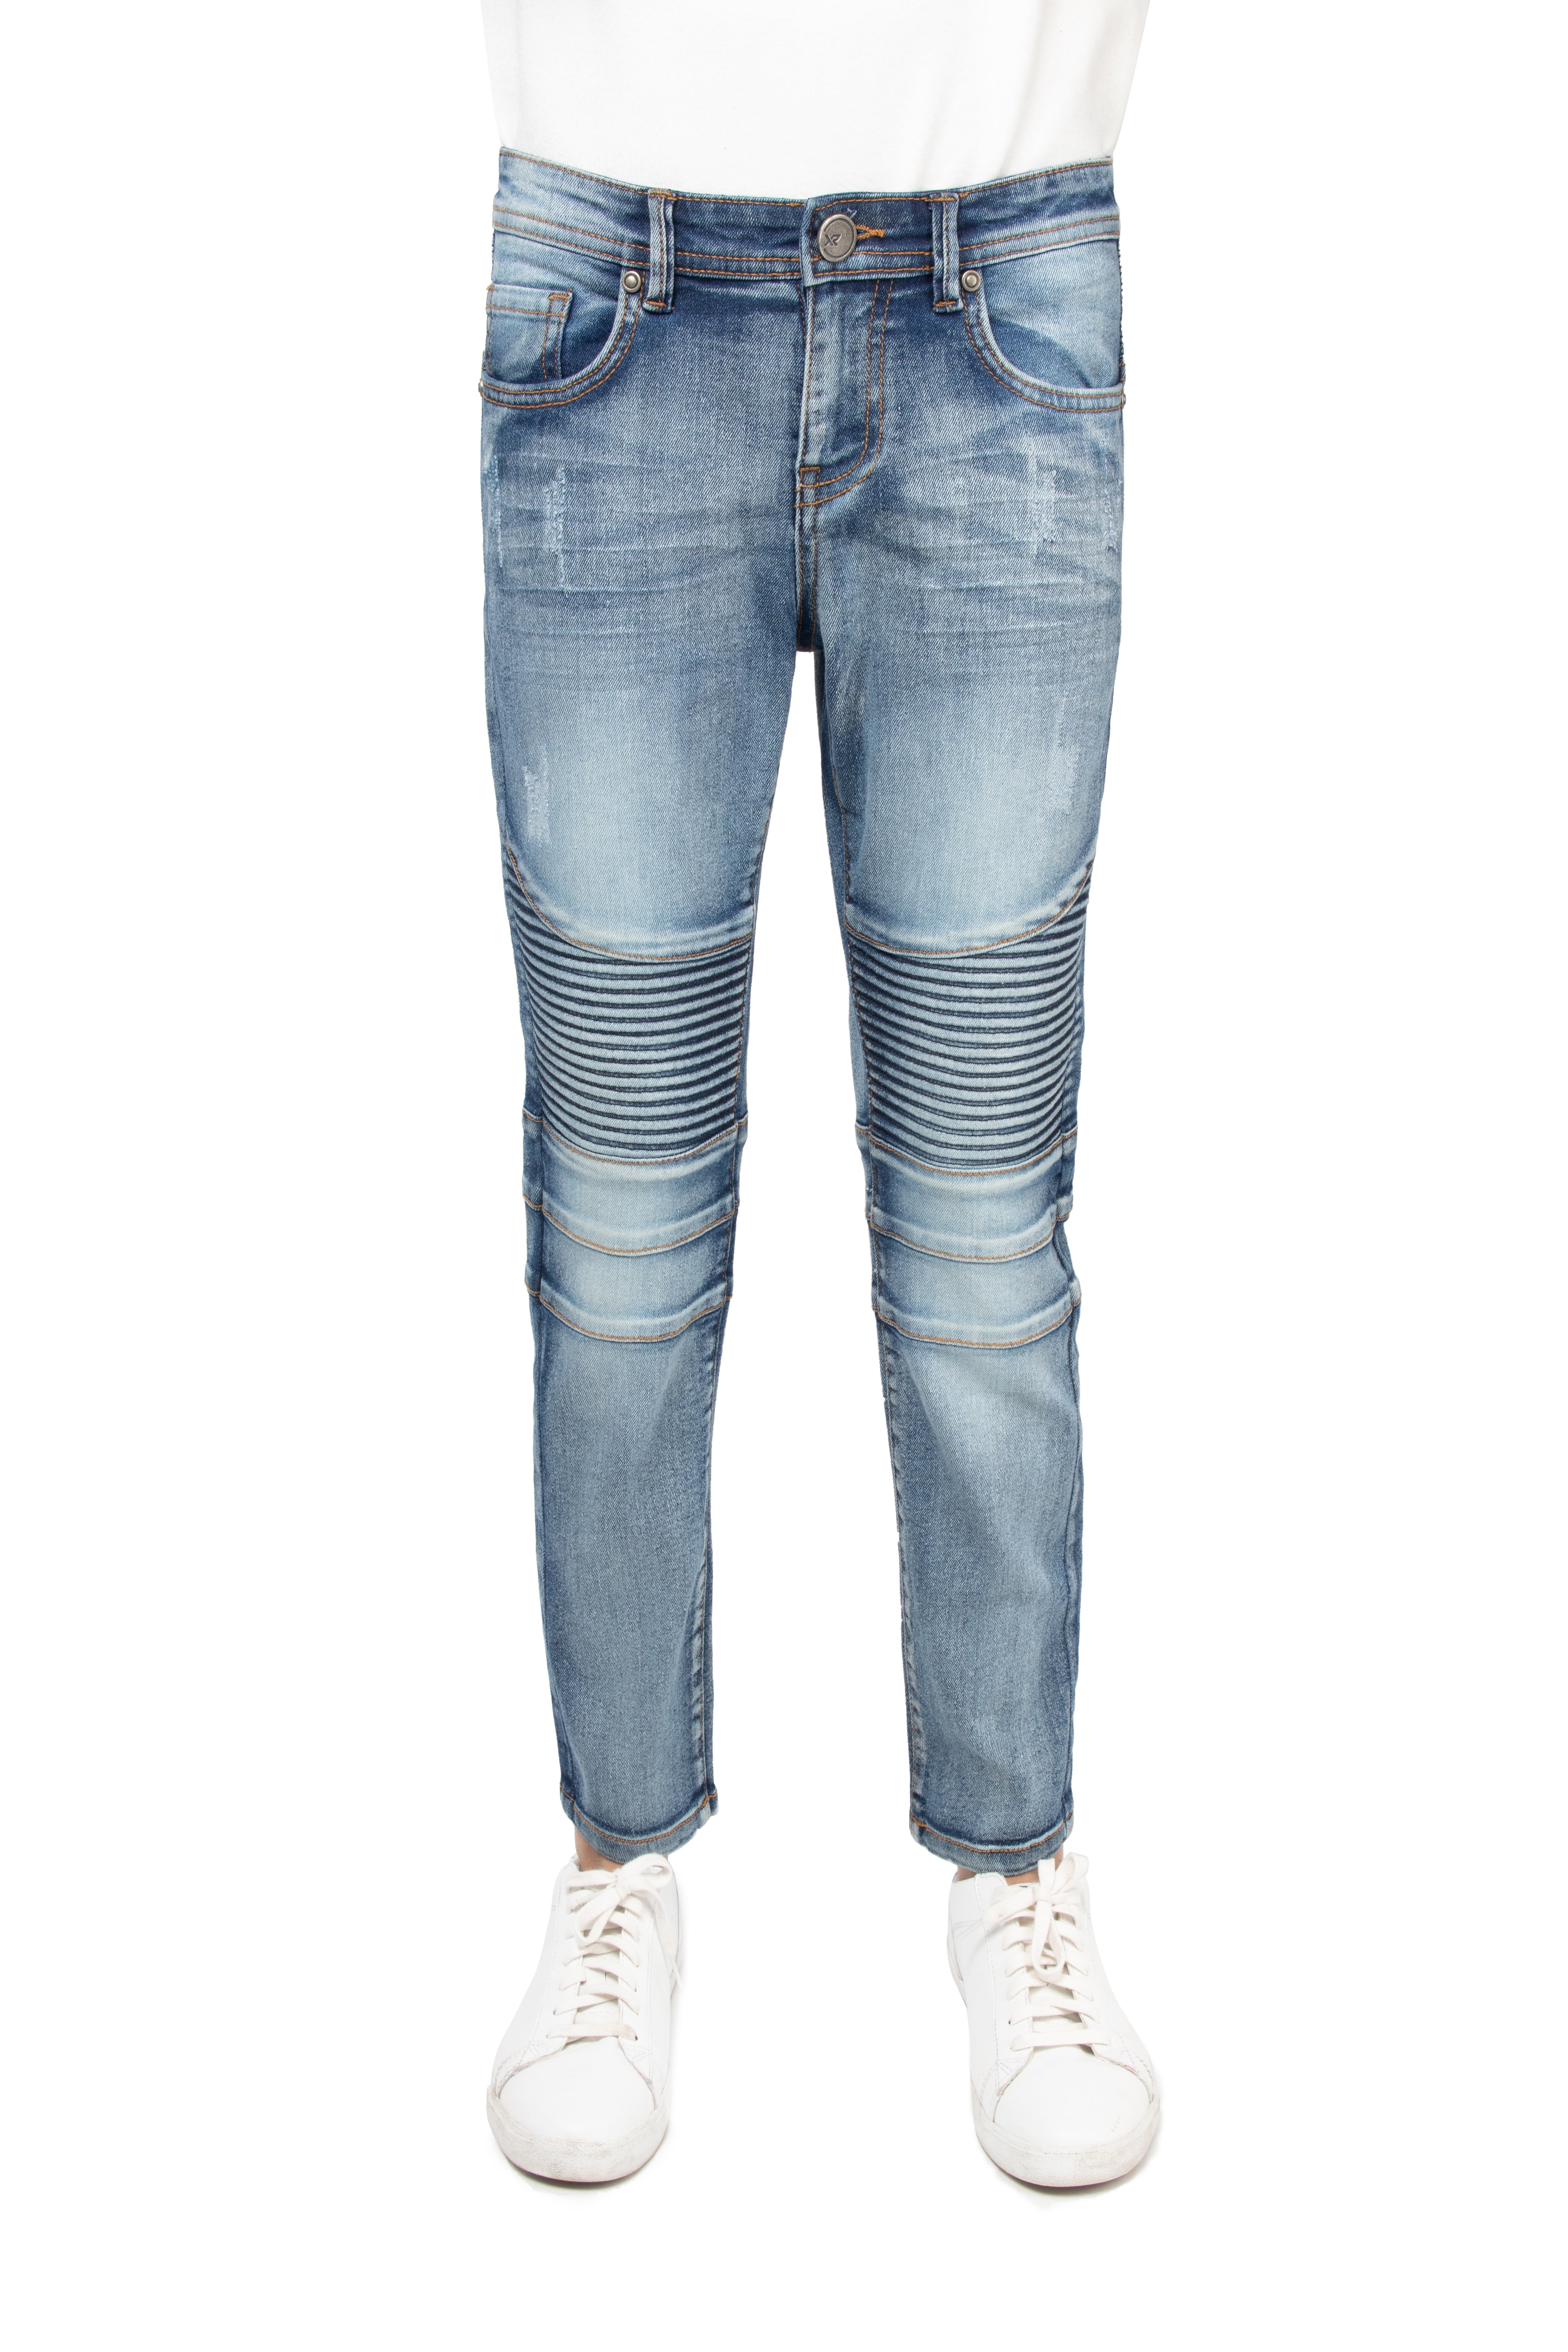 X RAY Slim Fit Biker Pants for Boys Big Boys Teen – Distressed Skinny Moto  Jeans, Light Blue Moto Size 12